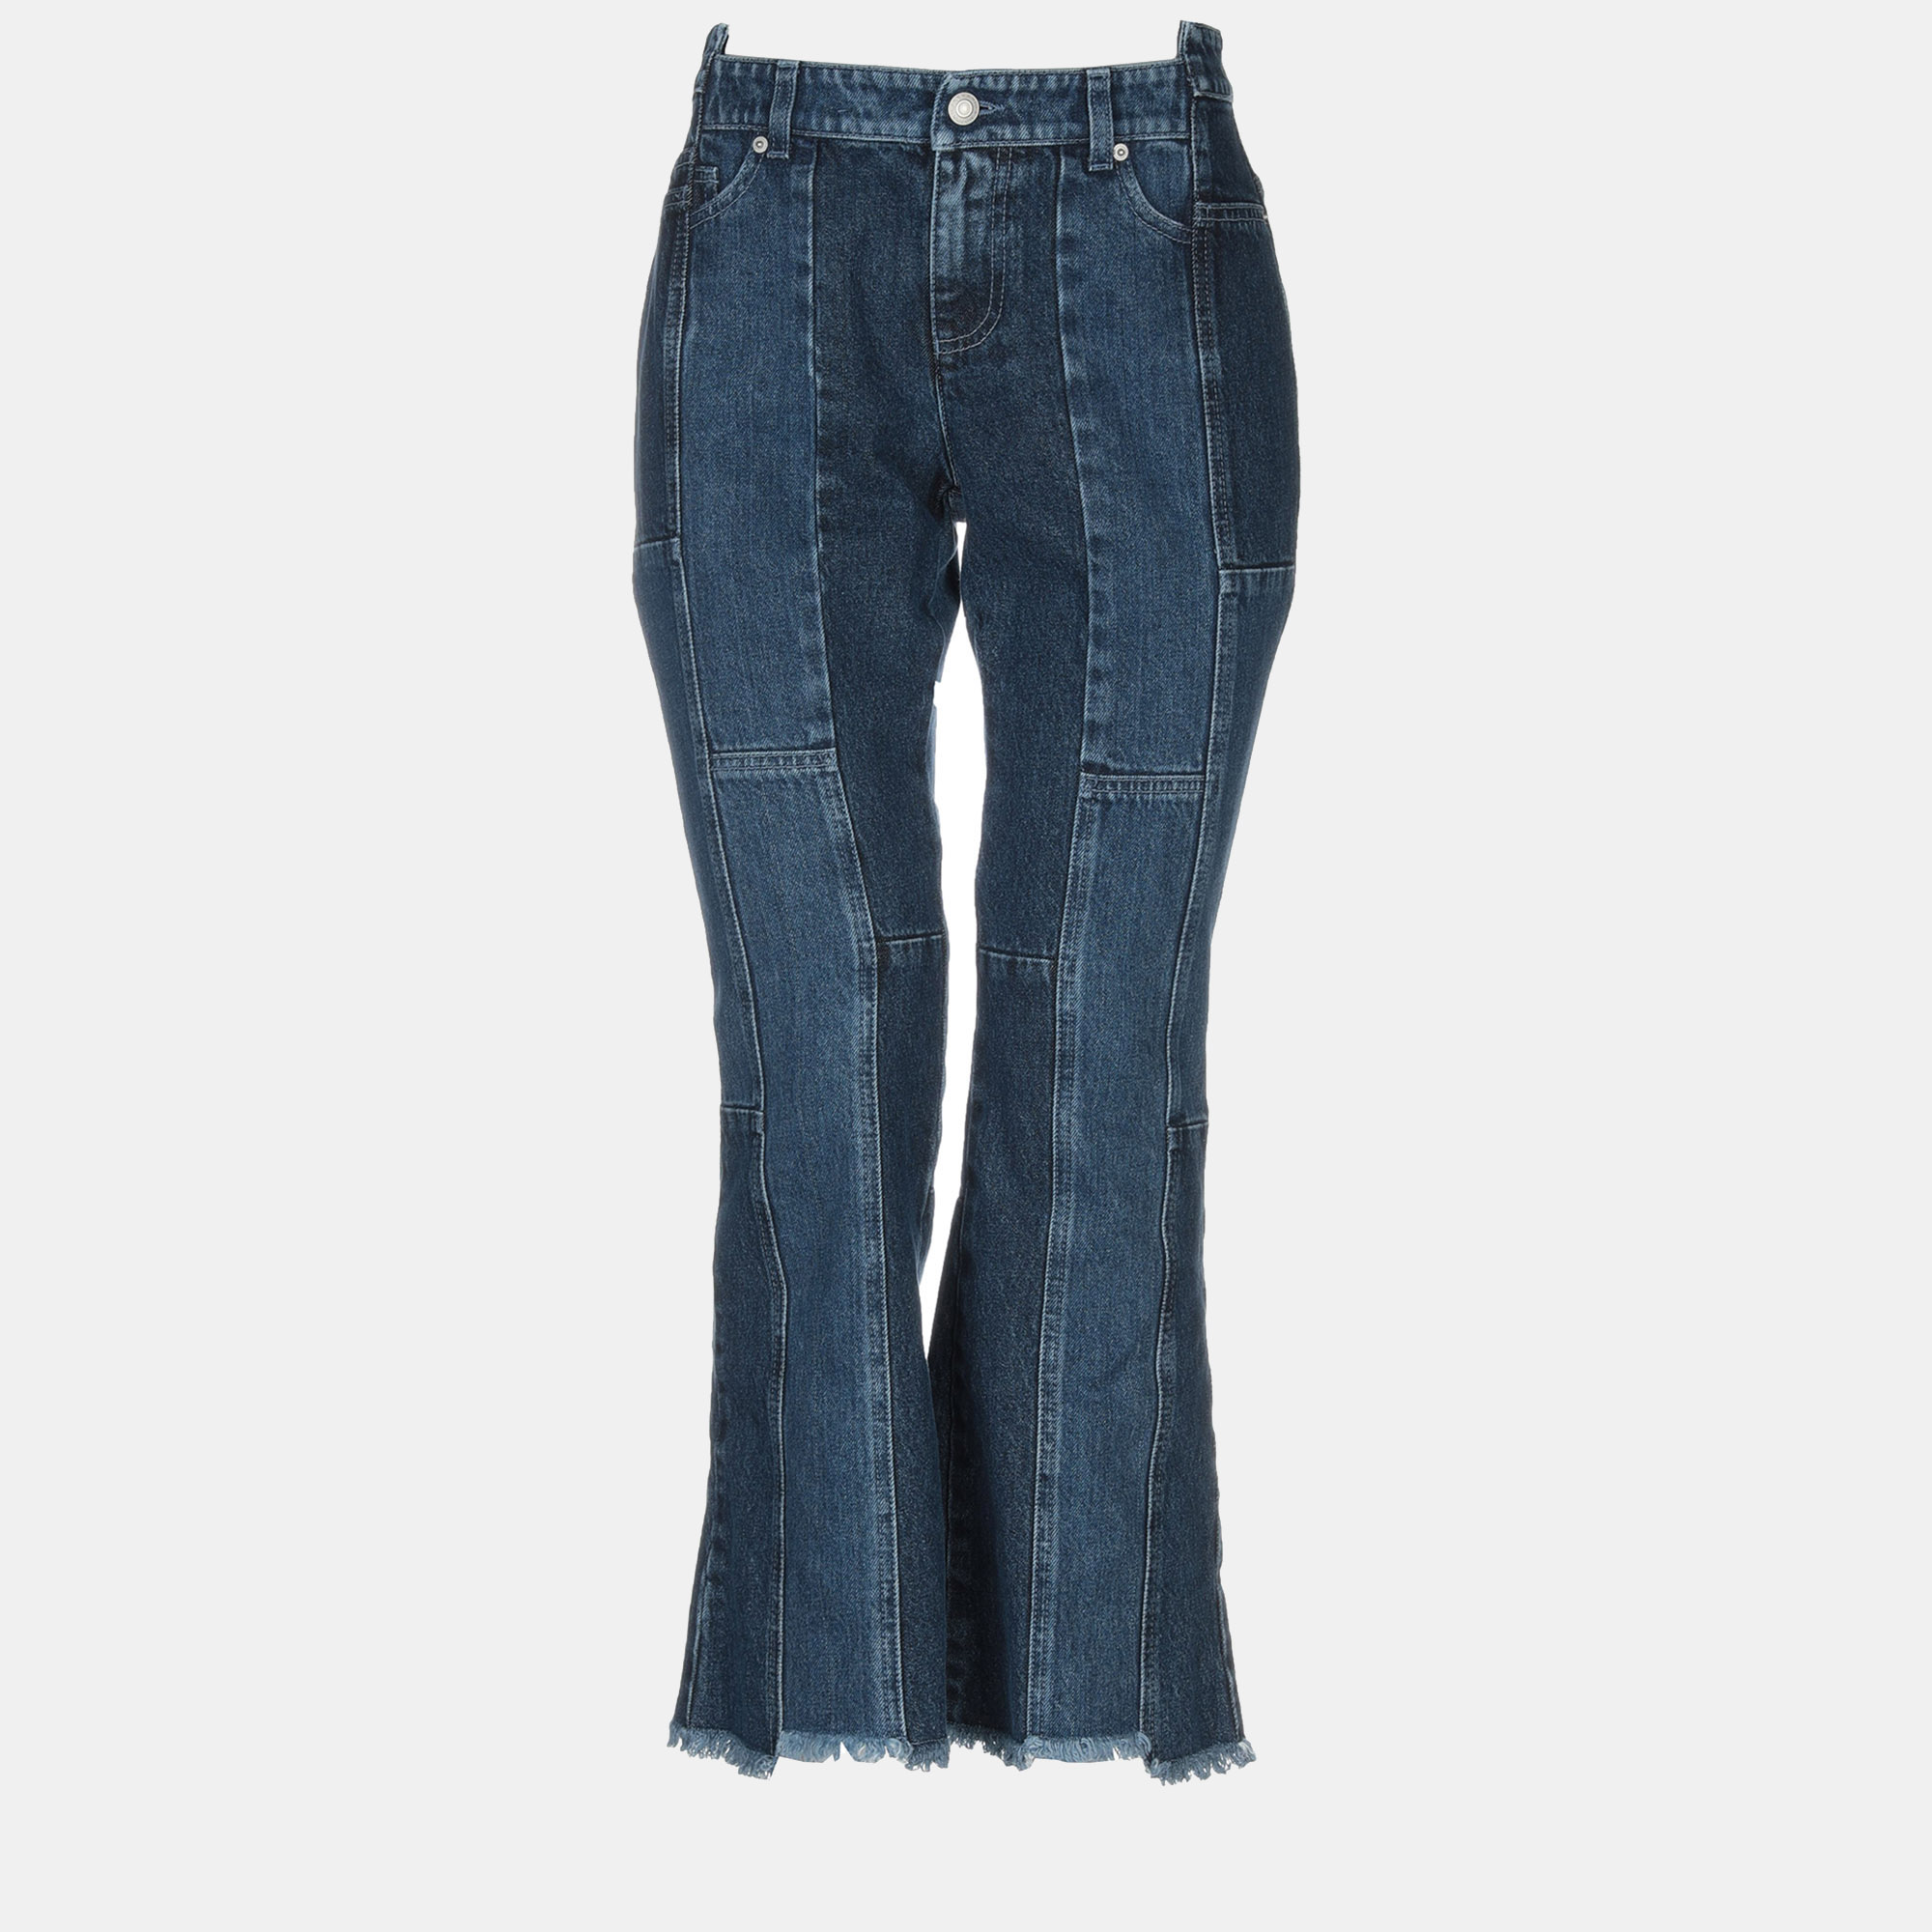 Alexander mcqueencotton jeans 28